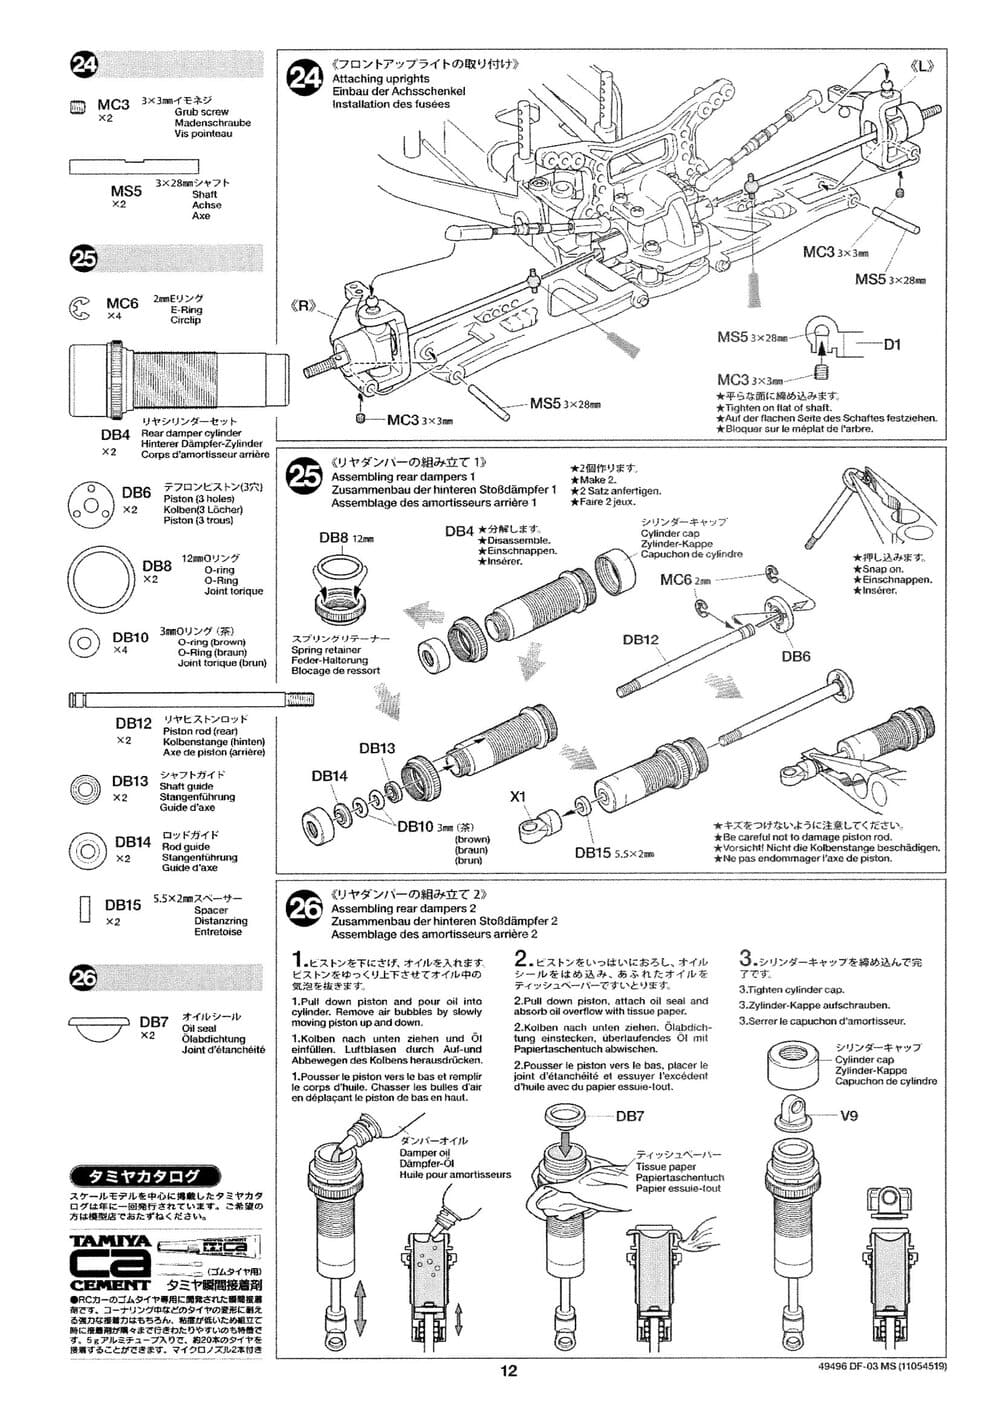 Tamiya - DF-03 MS Chassis Chassis - Manual - Page 12